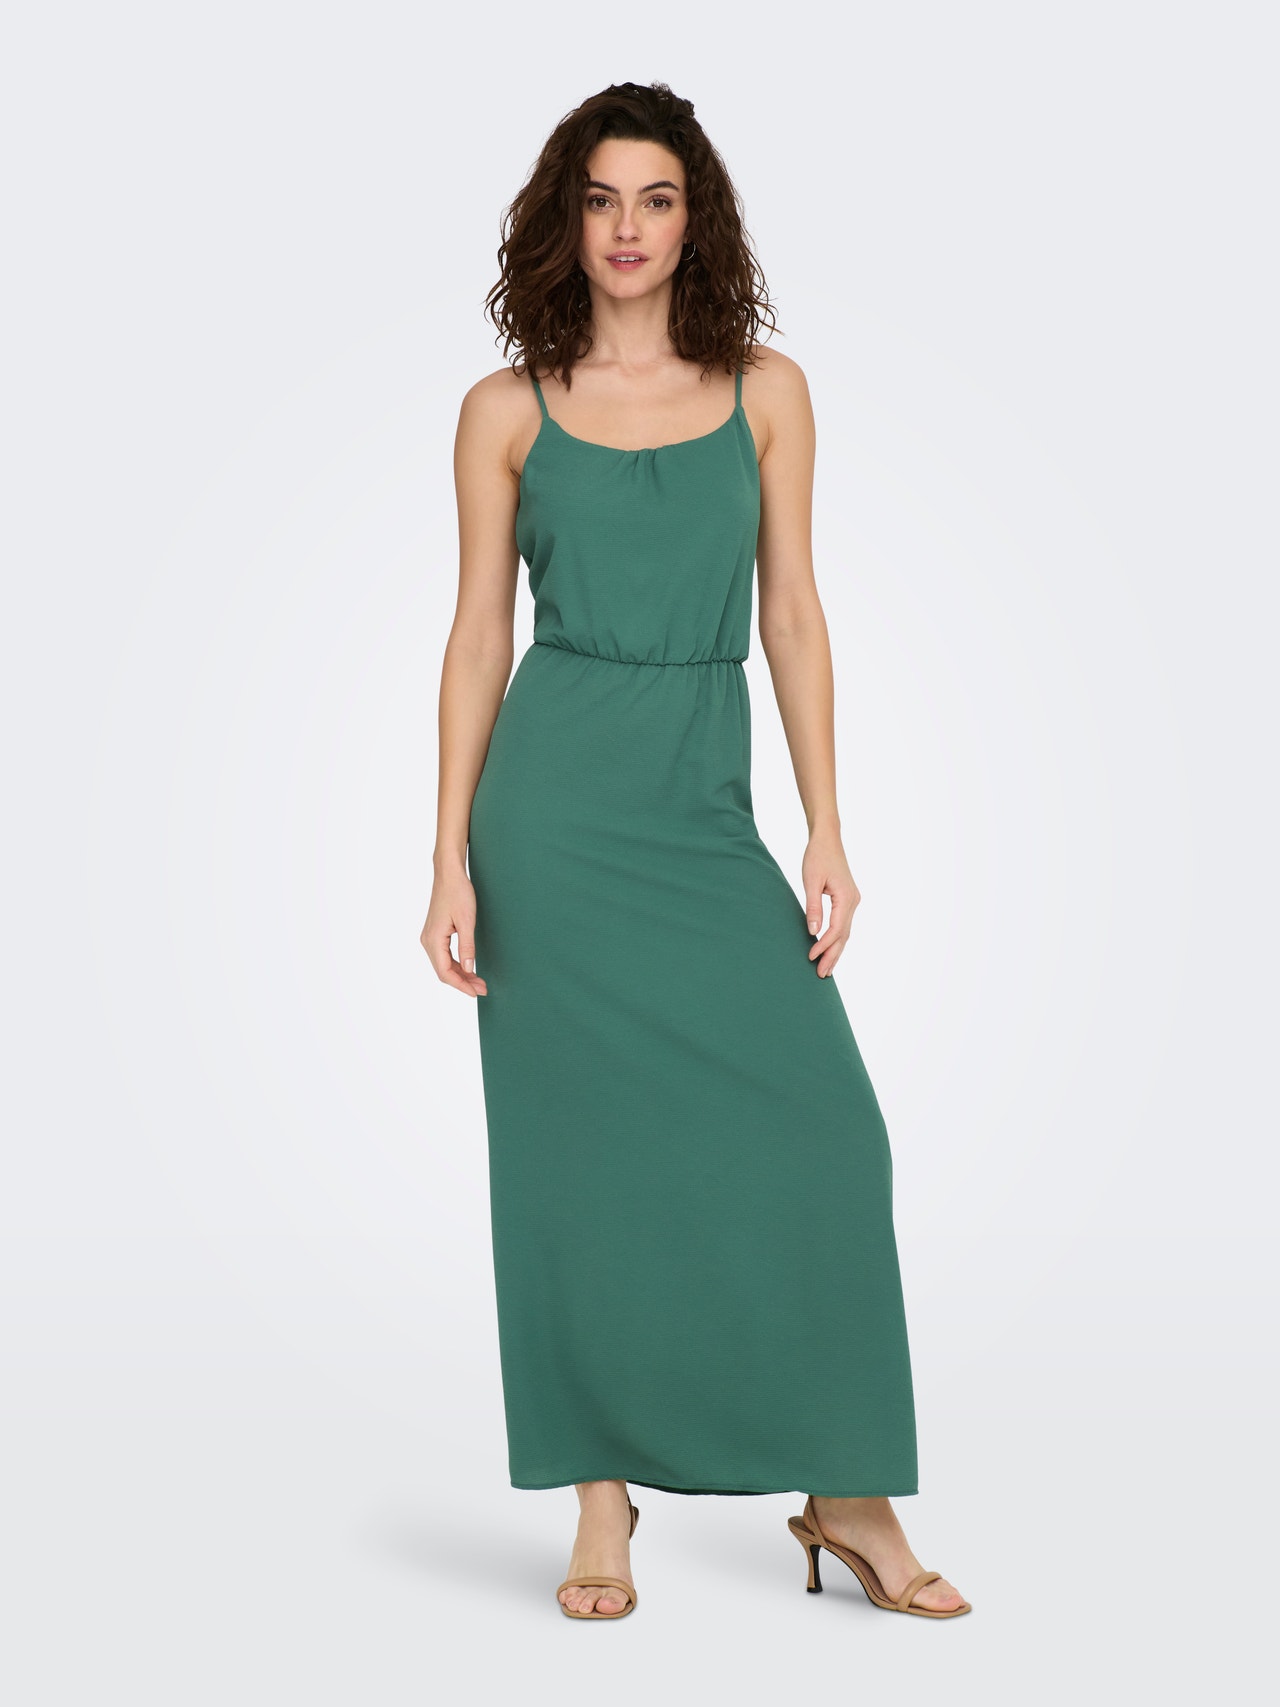 perspectief tafel envelop Effen gekleurd Maxi jurk | Donkergroen | ONLY®